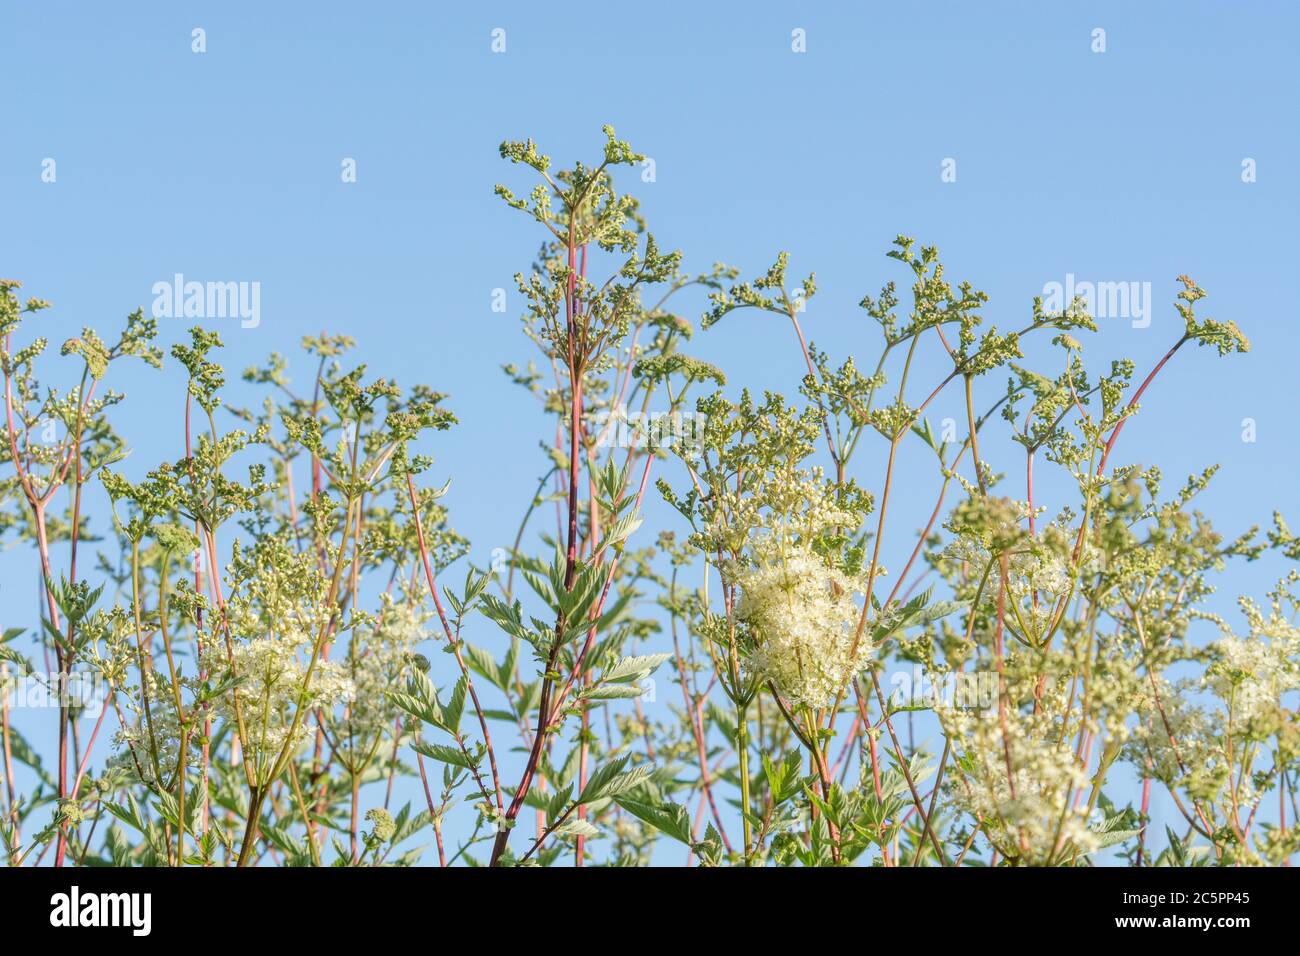 Low angle shot of flowering Meadowsweet / Filipendula ulmaria. Medicinal plant once used in herbal medicine & herbal remedies for analgesic properties Stock Photo